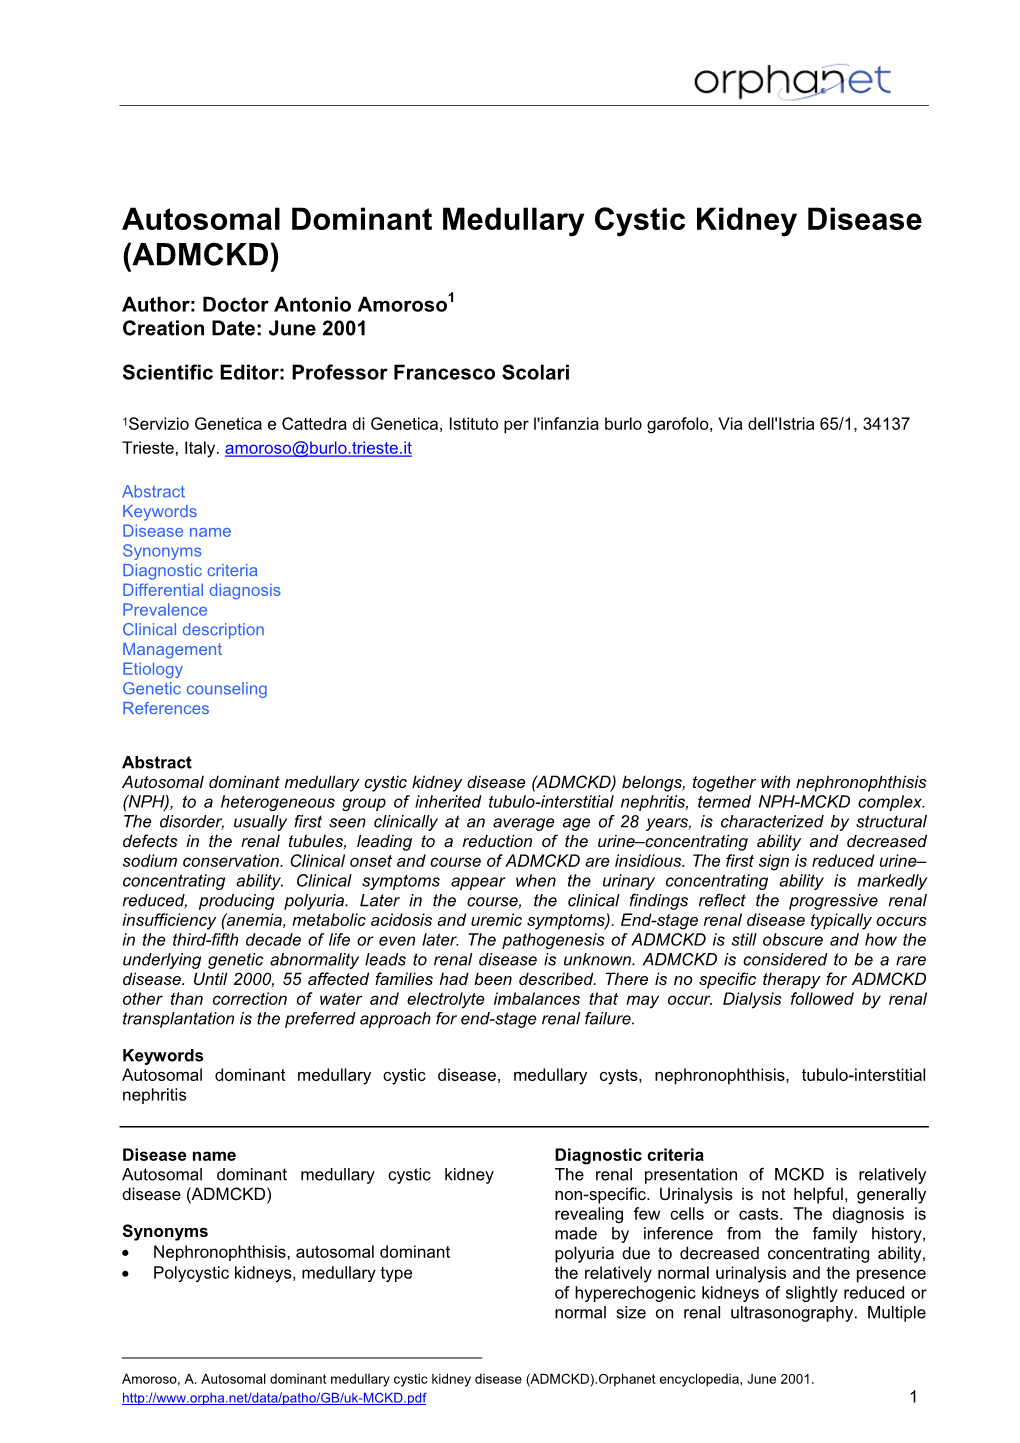 Autosomal Dominant Medullary Cystic Kidney Disease (ADMCKD)